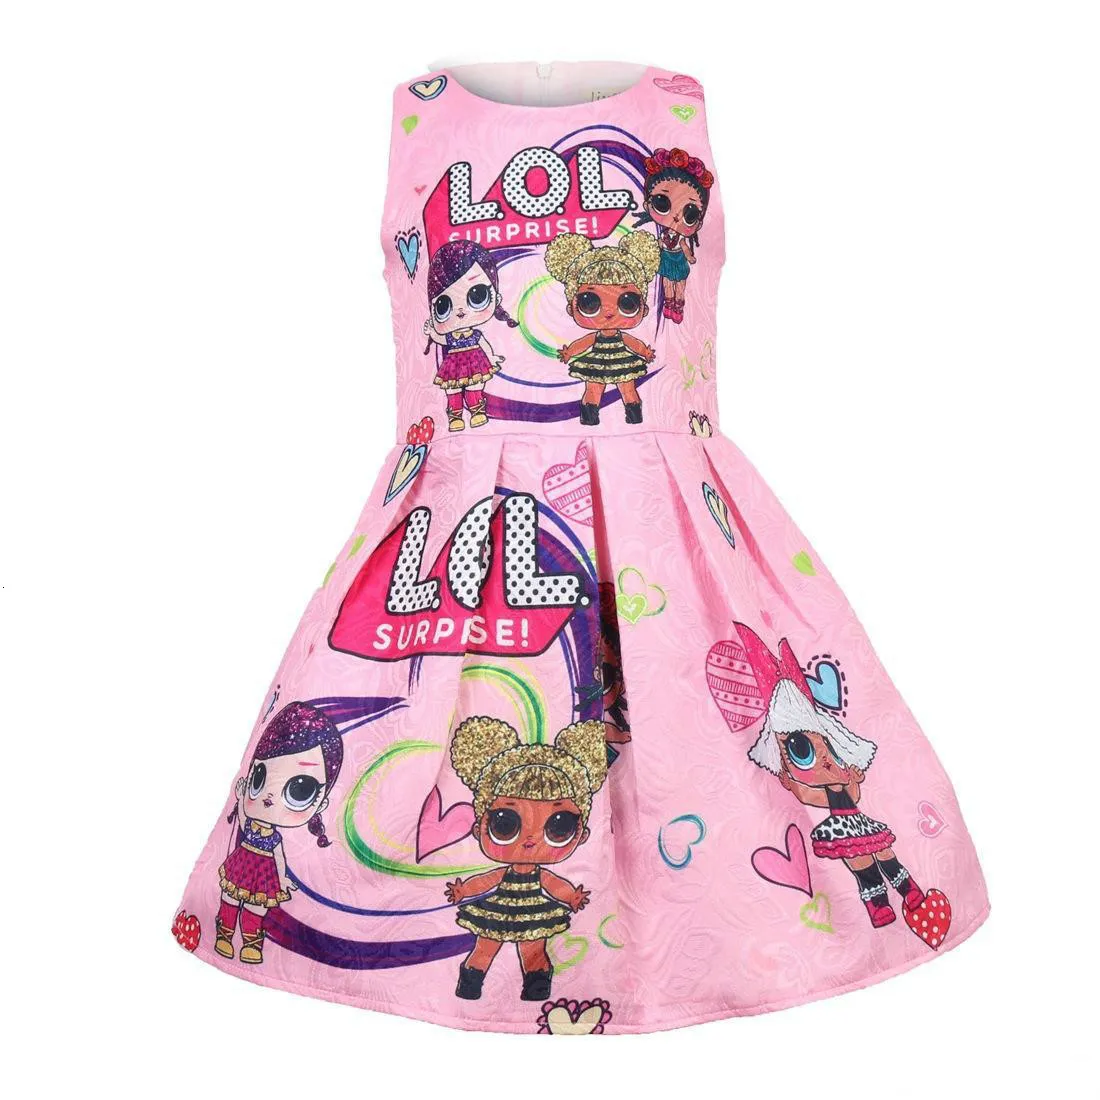 2019 verano superventas niños niñas vestidos muñecas princesa desfile vestido niñas ropa 100-140